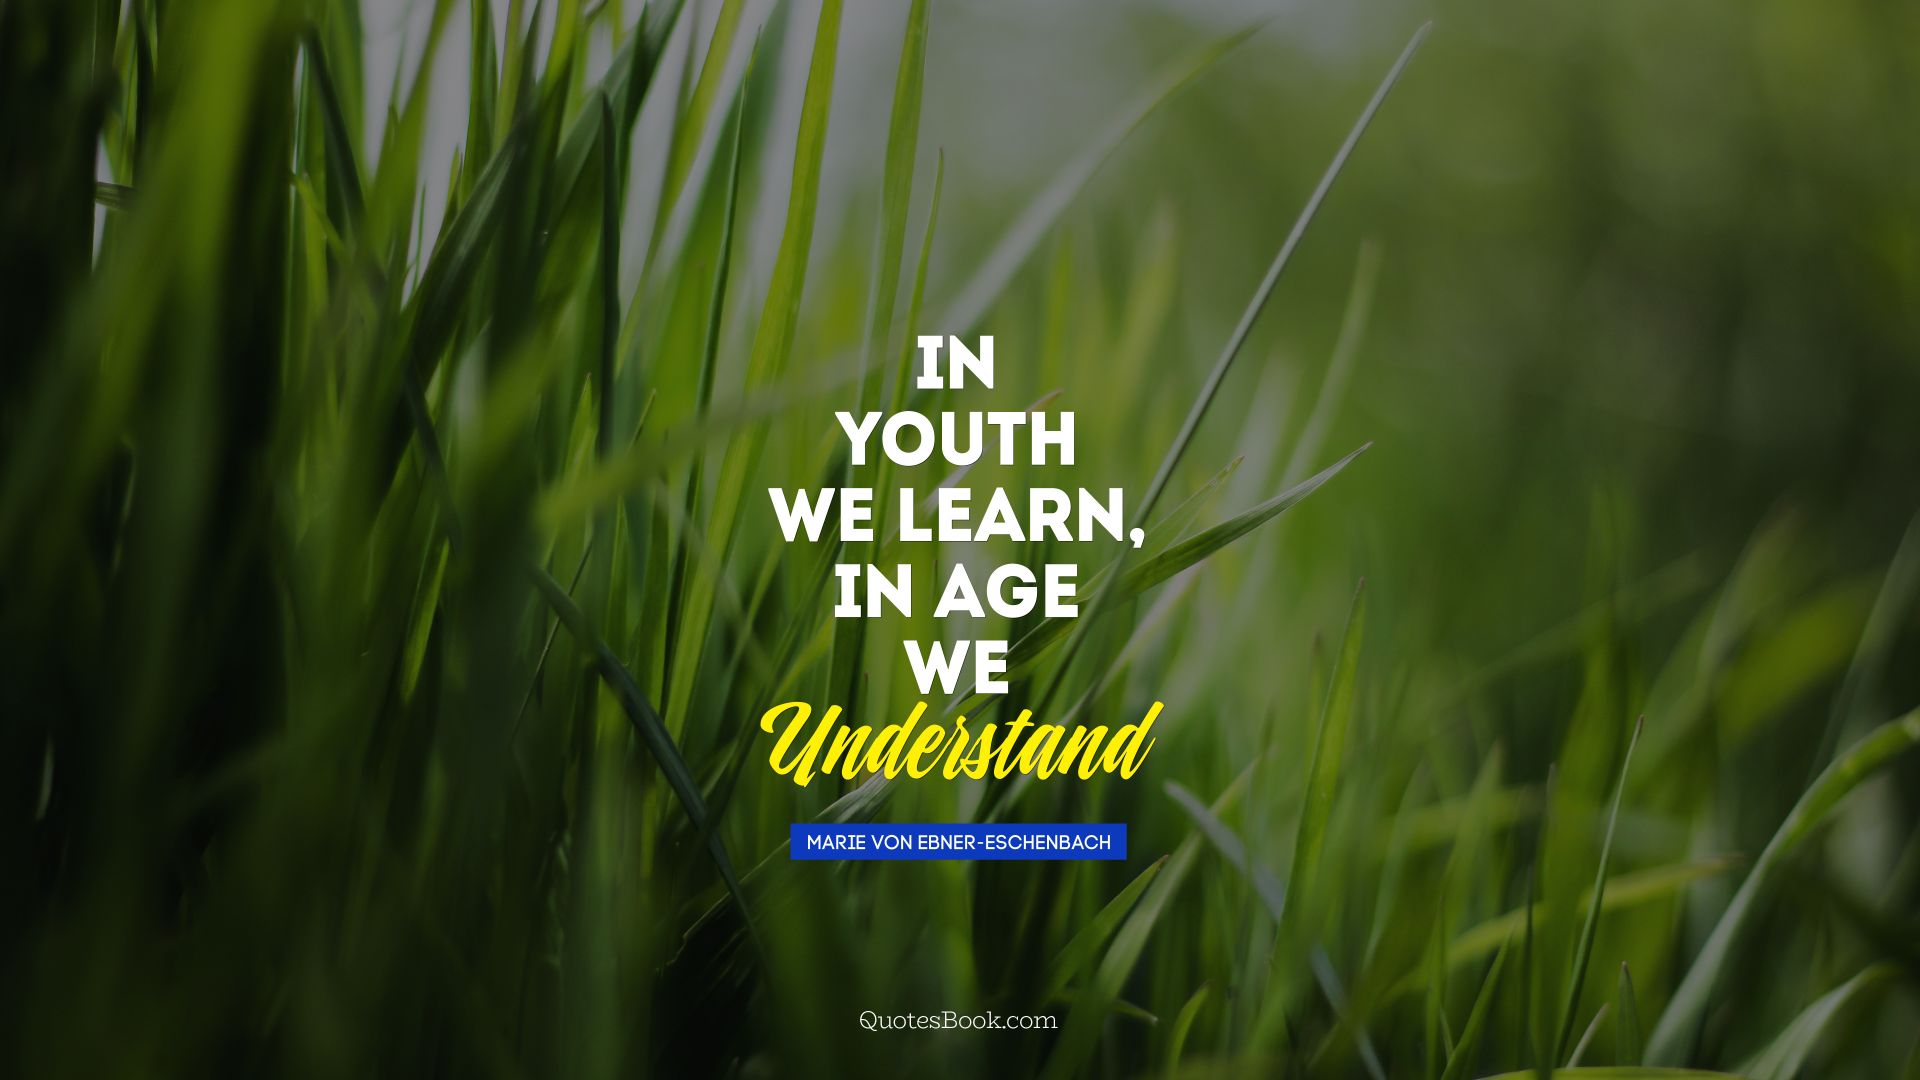 In youth we learn, in age we understand. - Quote by Marie von Ebner-Eschenbach